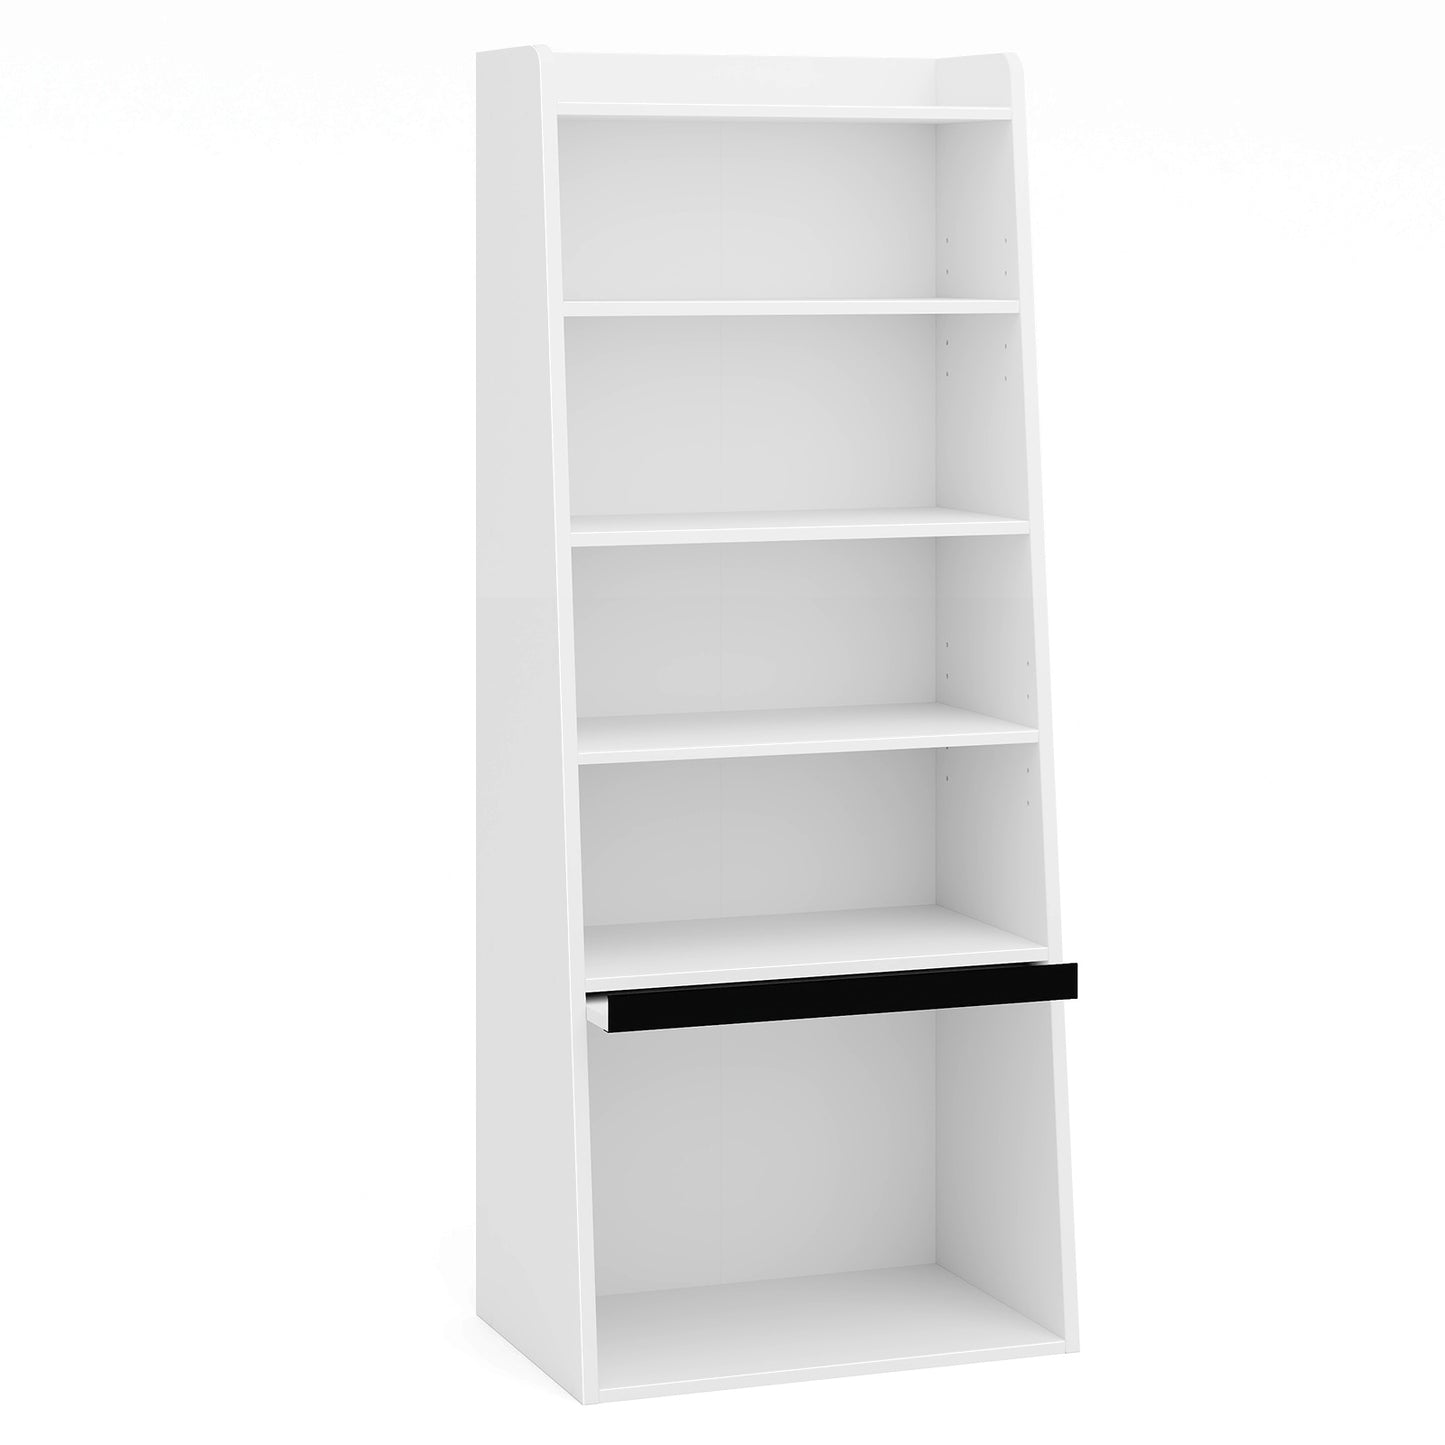 6-Tier Bookcase Freestanding Ladder Bookshelf with 2 Adjustable Shelves and Flip Up Door-White